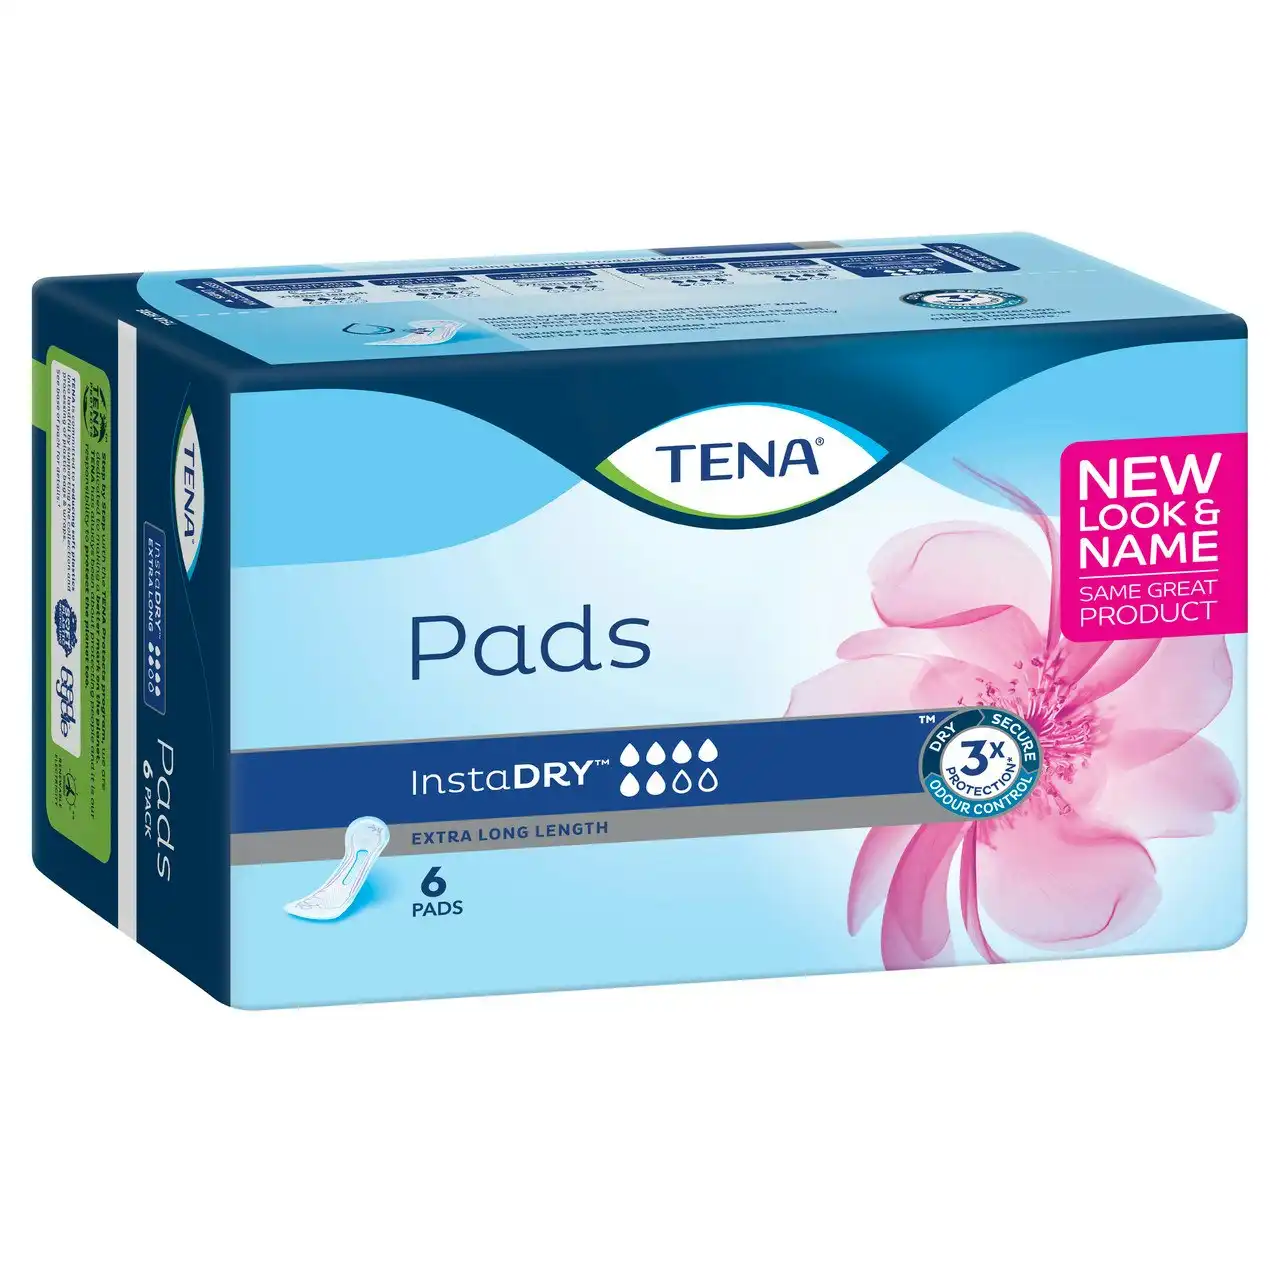 TENA Pads InstaDRY(TM) Extra Long Length 6 Pack